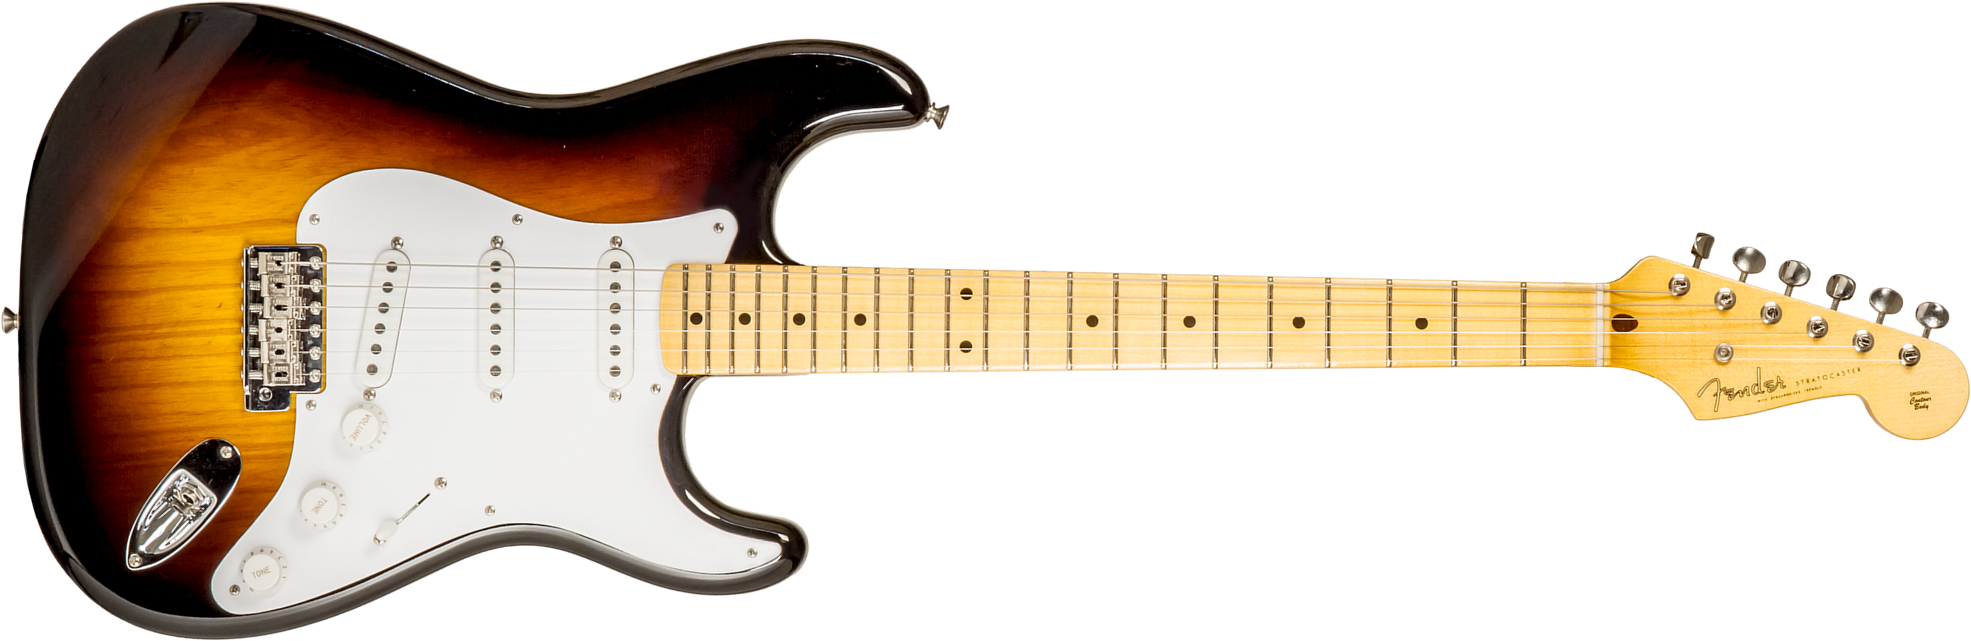 Fender Custom Shop Strat 1954 70th Anniv. #xn4597 3s Trem Mn - Time Capsule 2-color Sunburst - Elektrische gitaar in Str-vorm - Main picture